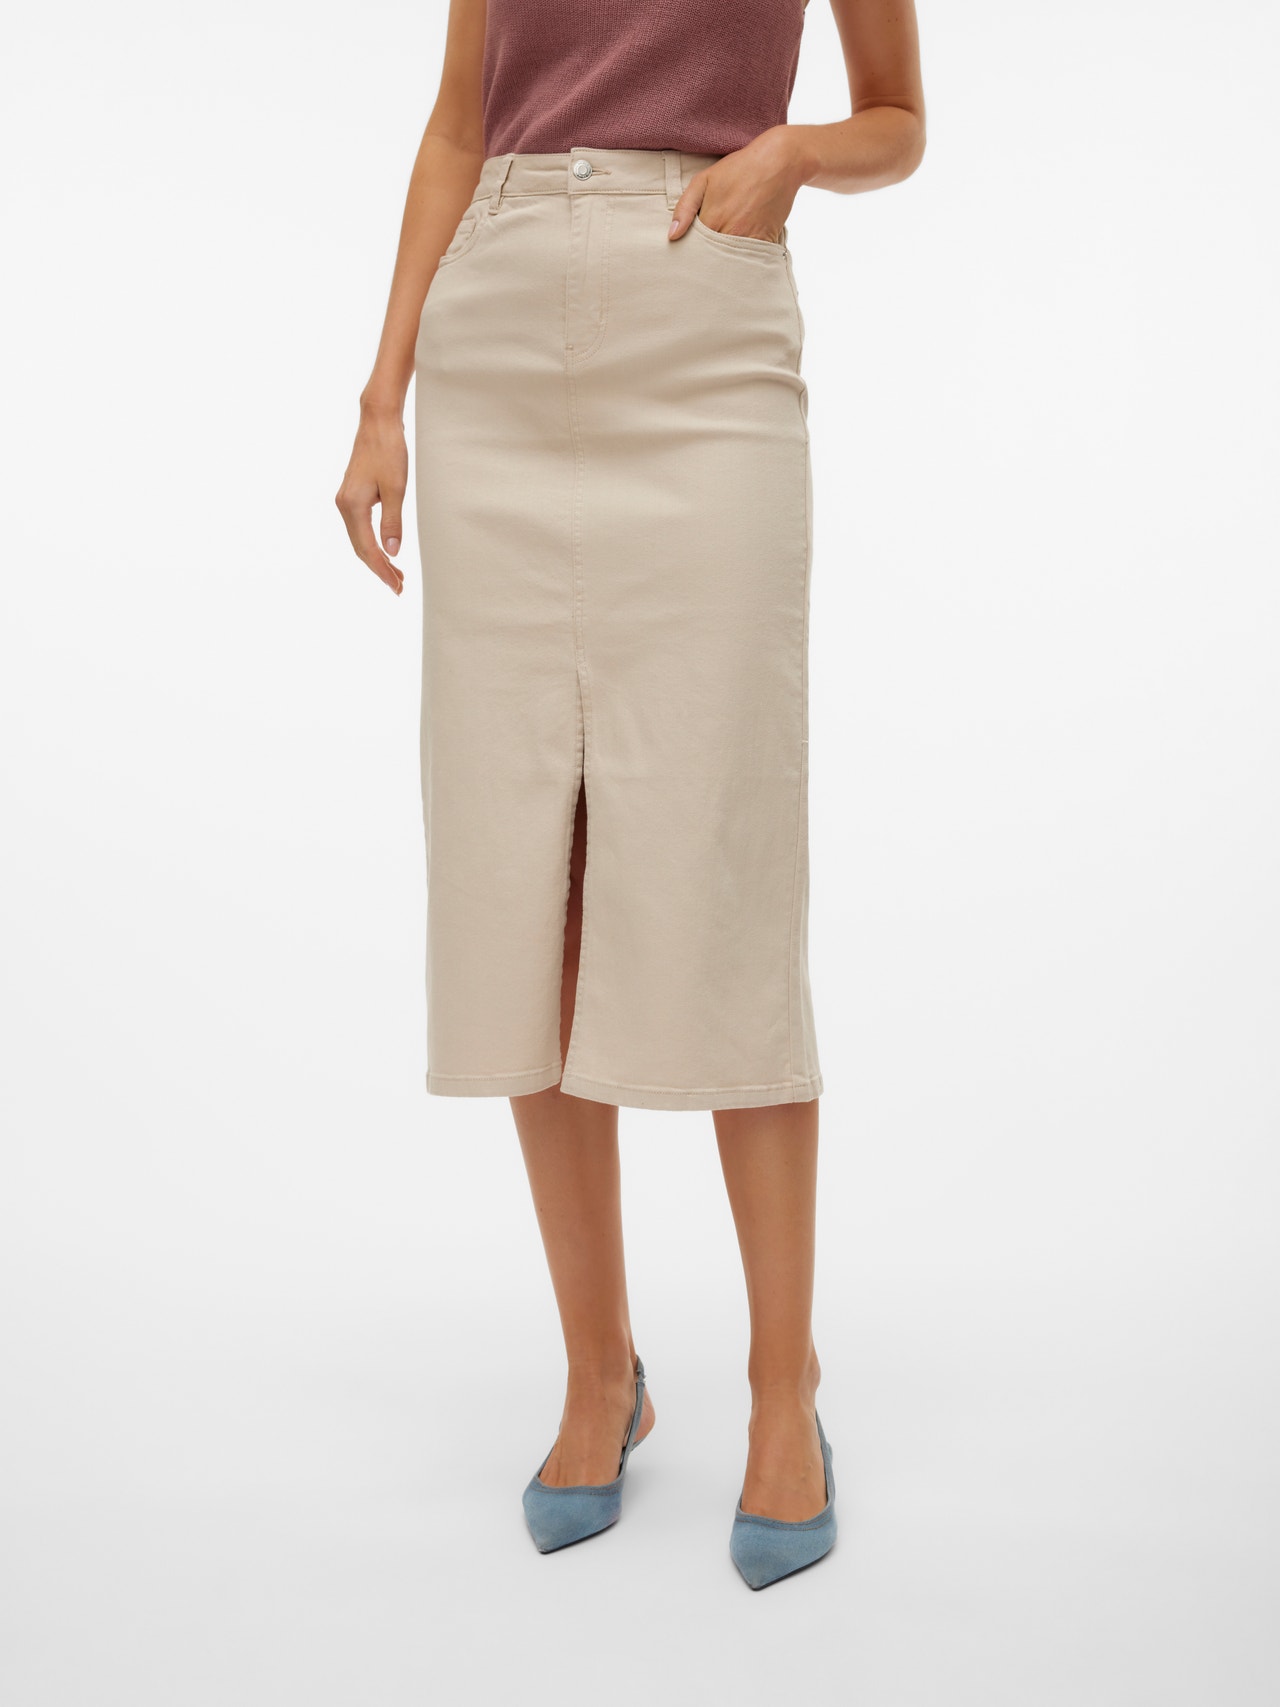 Vero Moda VMLUCKY Long Skirt -Pumice Stone - 10289850